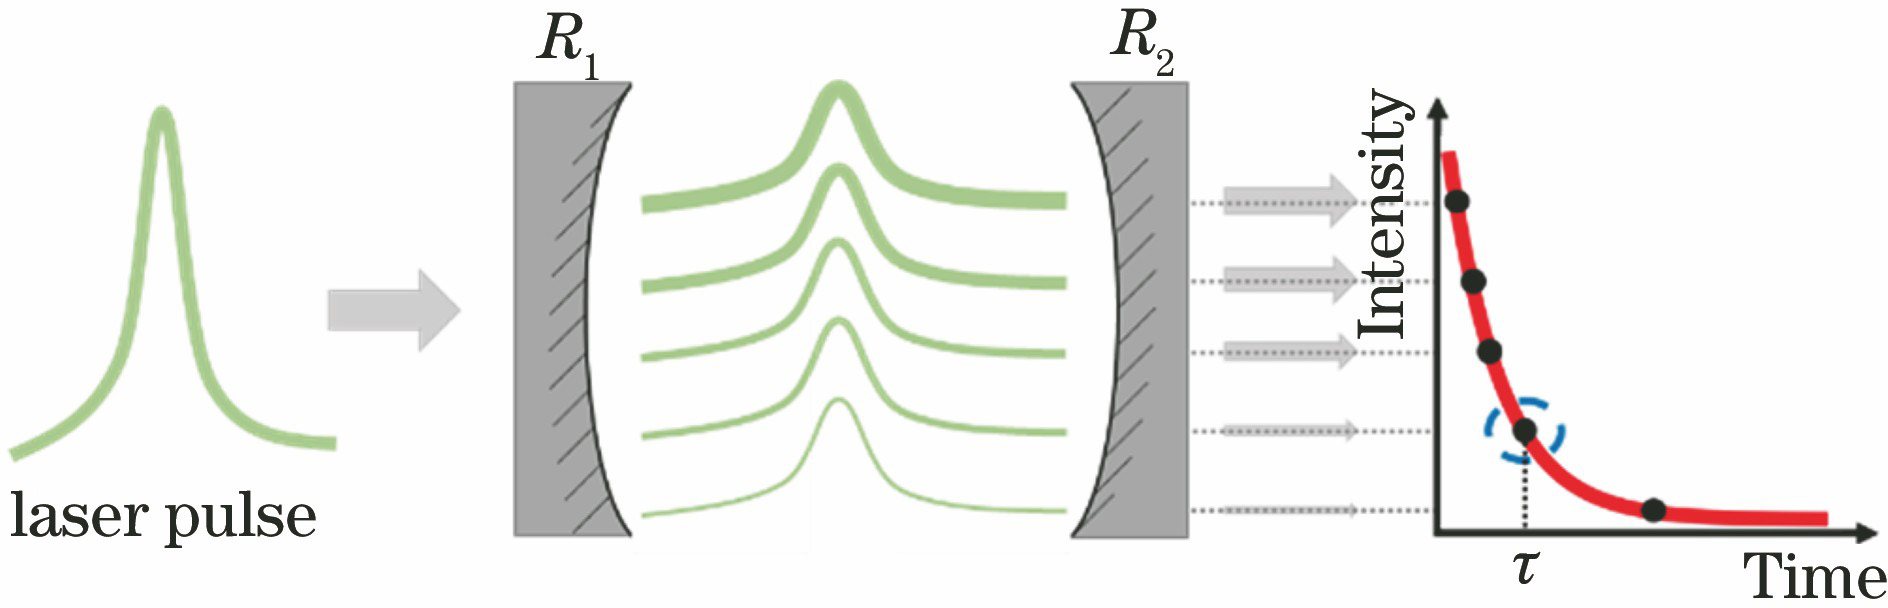 Principle diagram of cavity mirror loss measurement using cavity ring-down technology